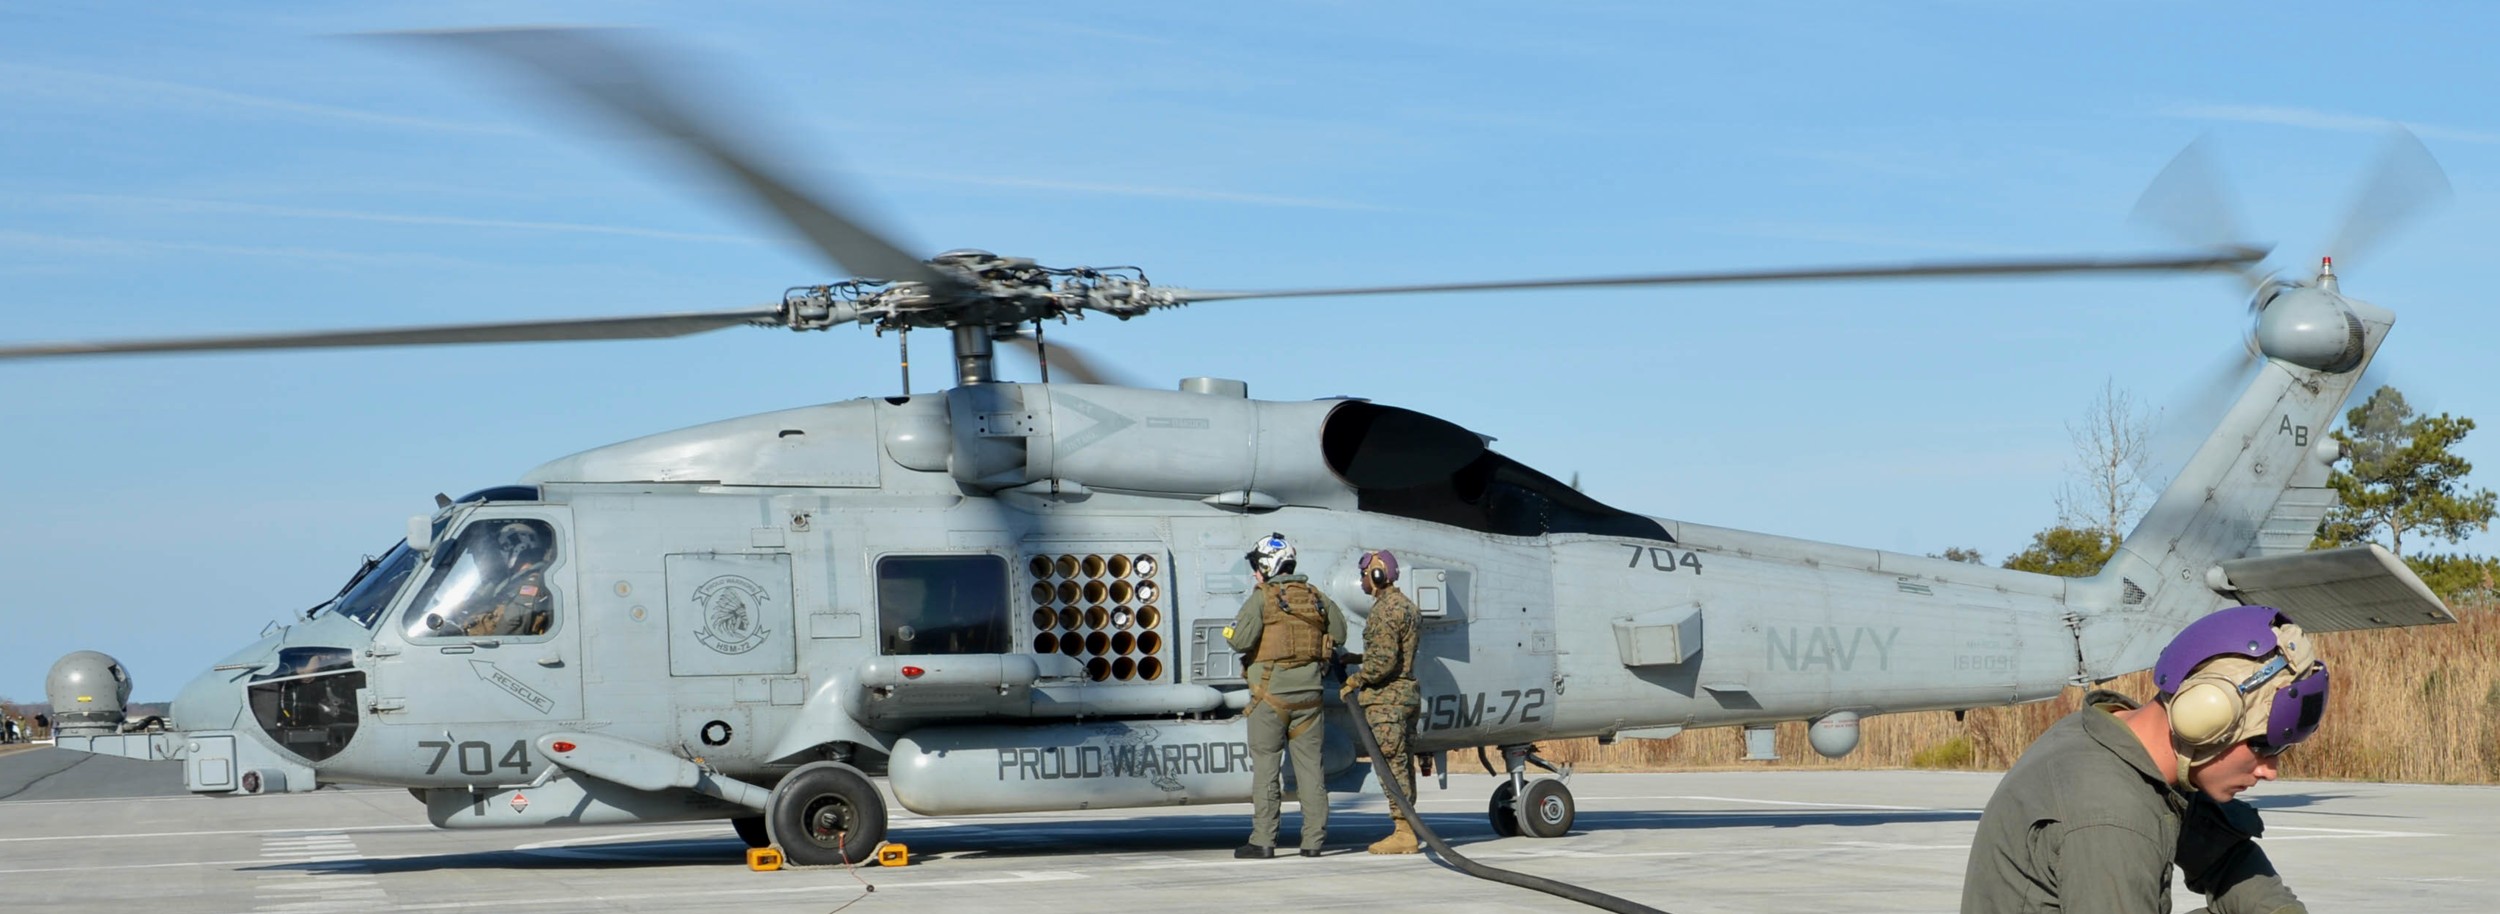 hsm-72 proud warriors helicopter maritime strike squadron mh-60r seahawk farp wallops island virginia 57